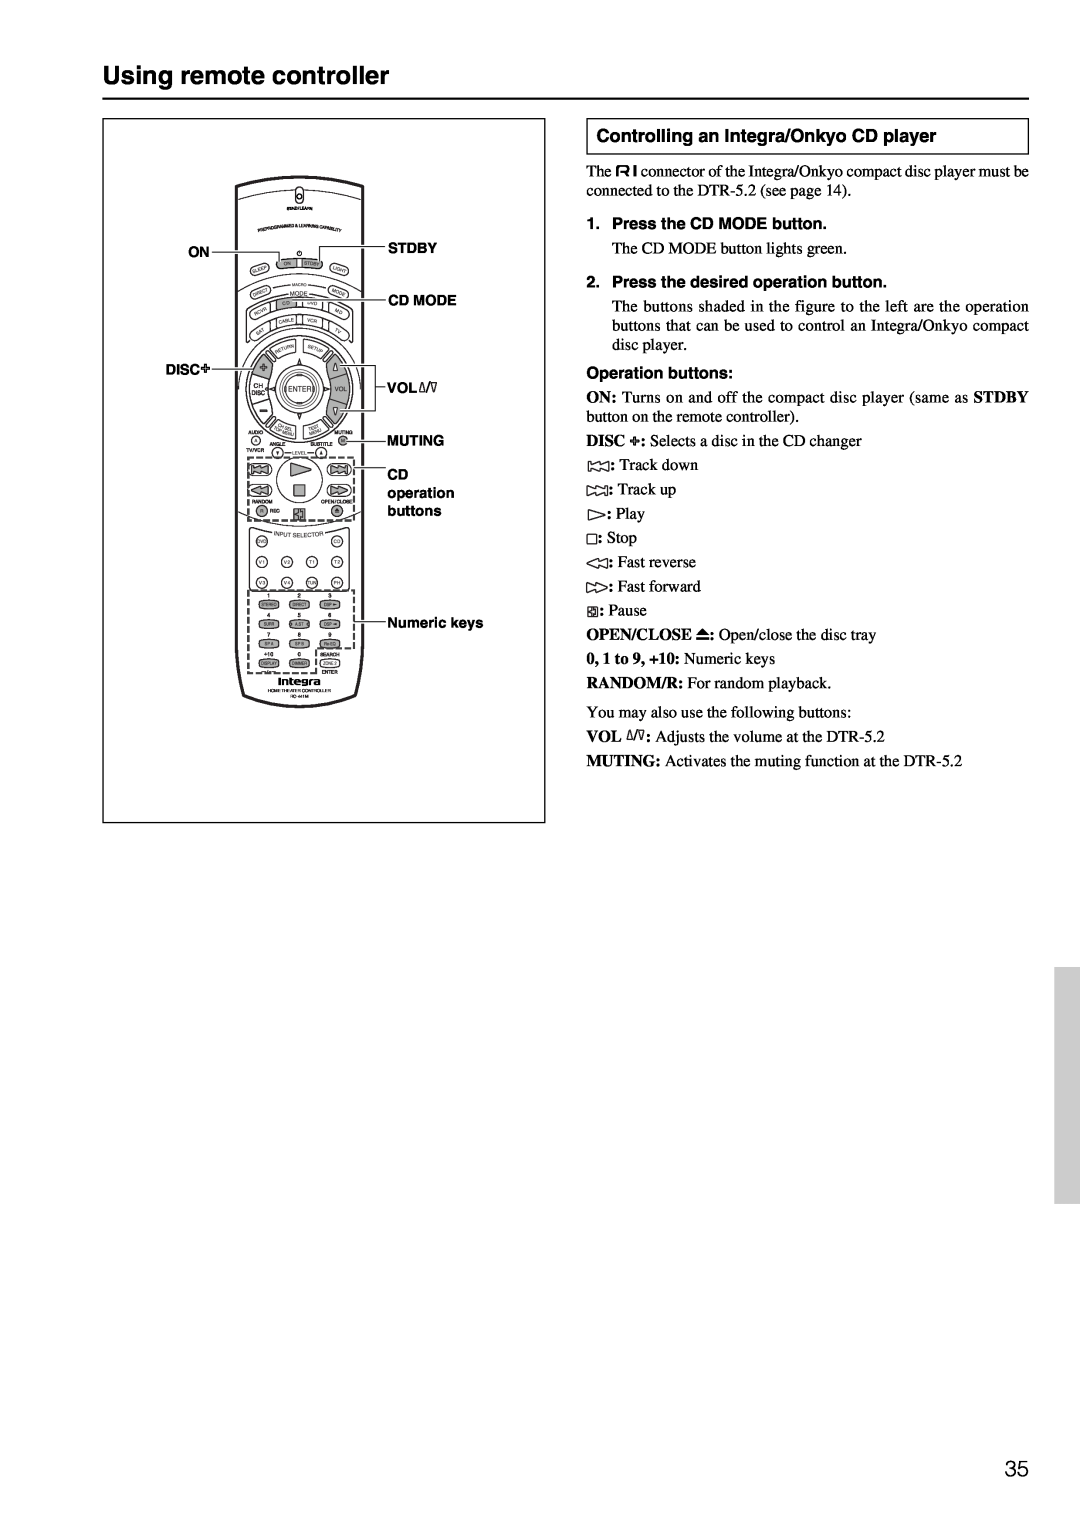 Integra DTR-5.2 appendix Using remote controller, Controlling an Integra/Onkyo CD player 